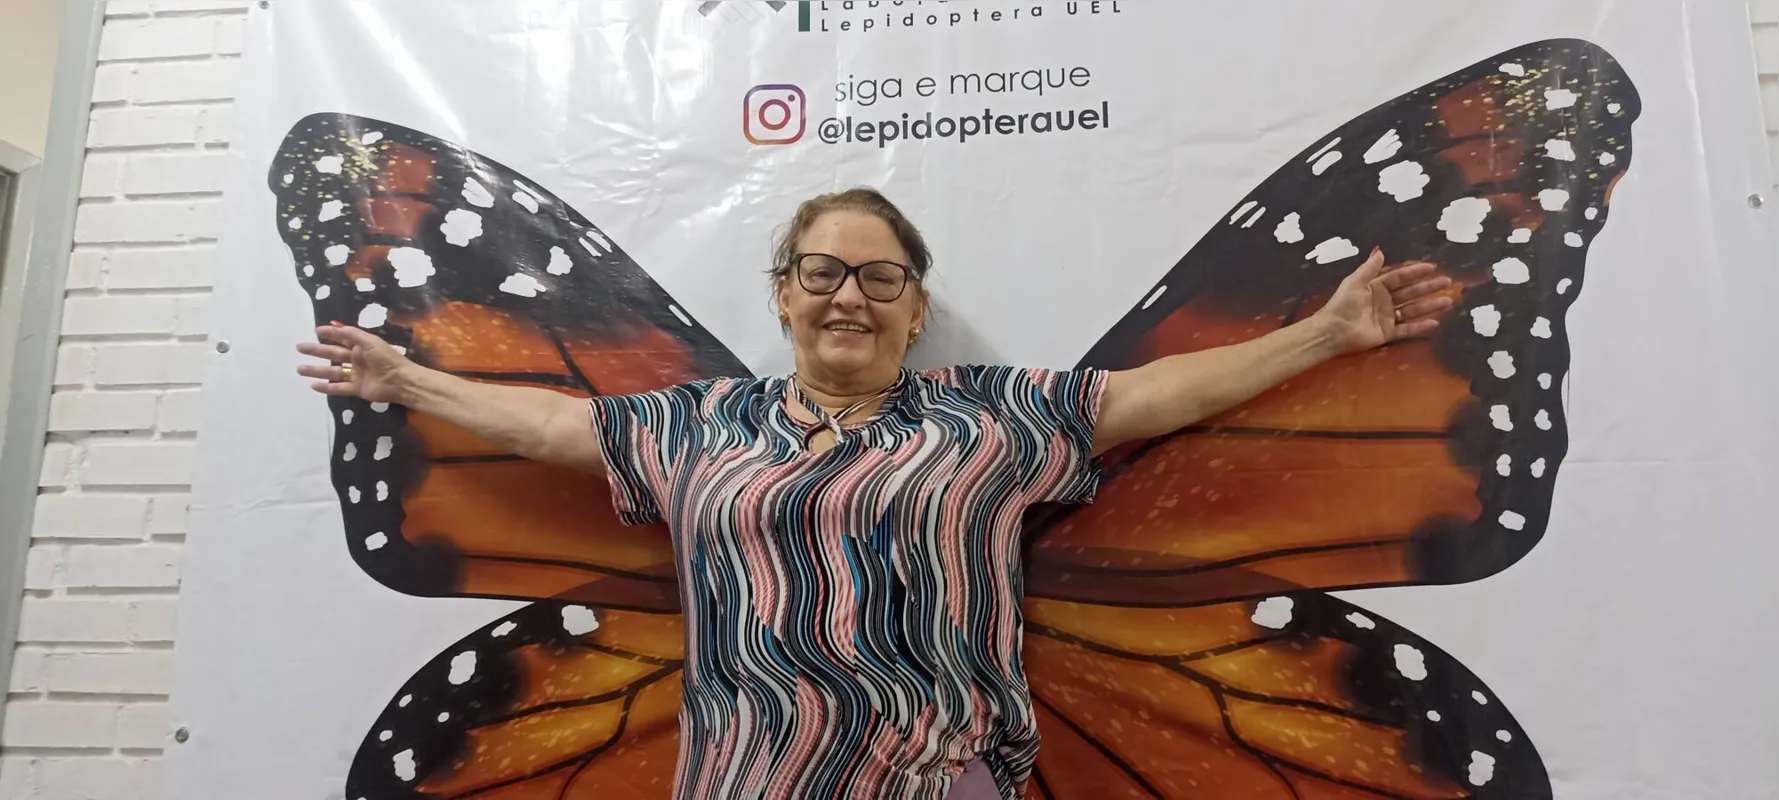 Maria José Lagana, 86 anos: "Eu amei tudo, nunca imaginei"